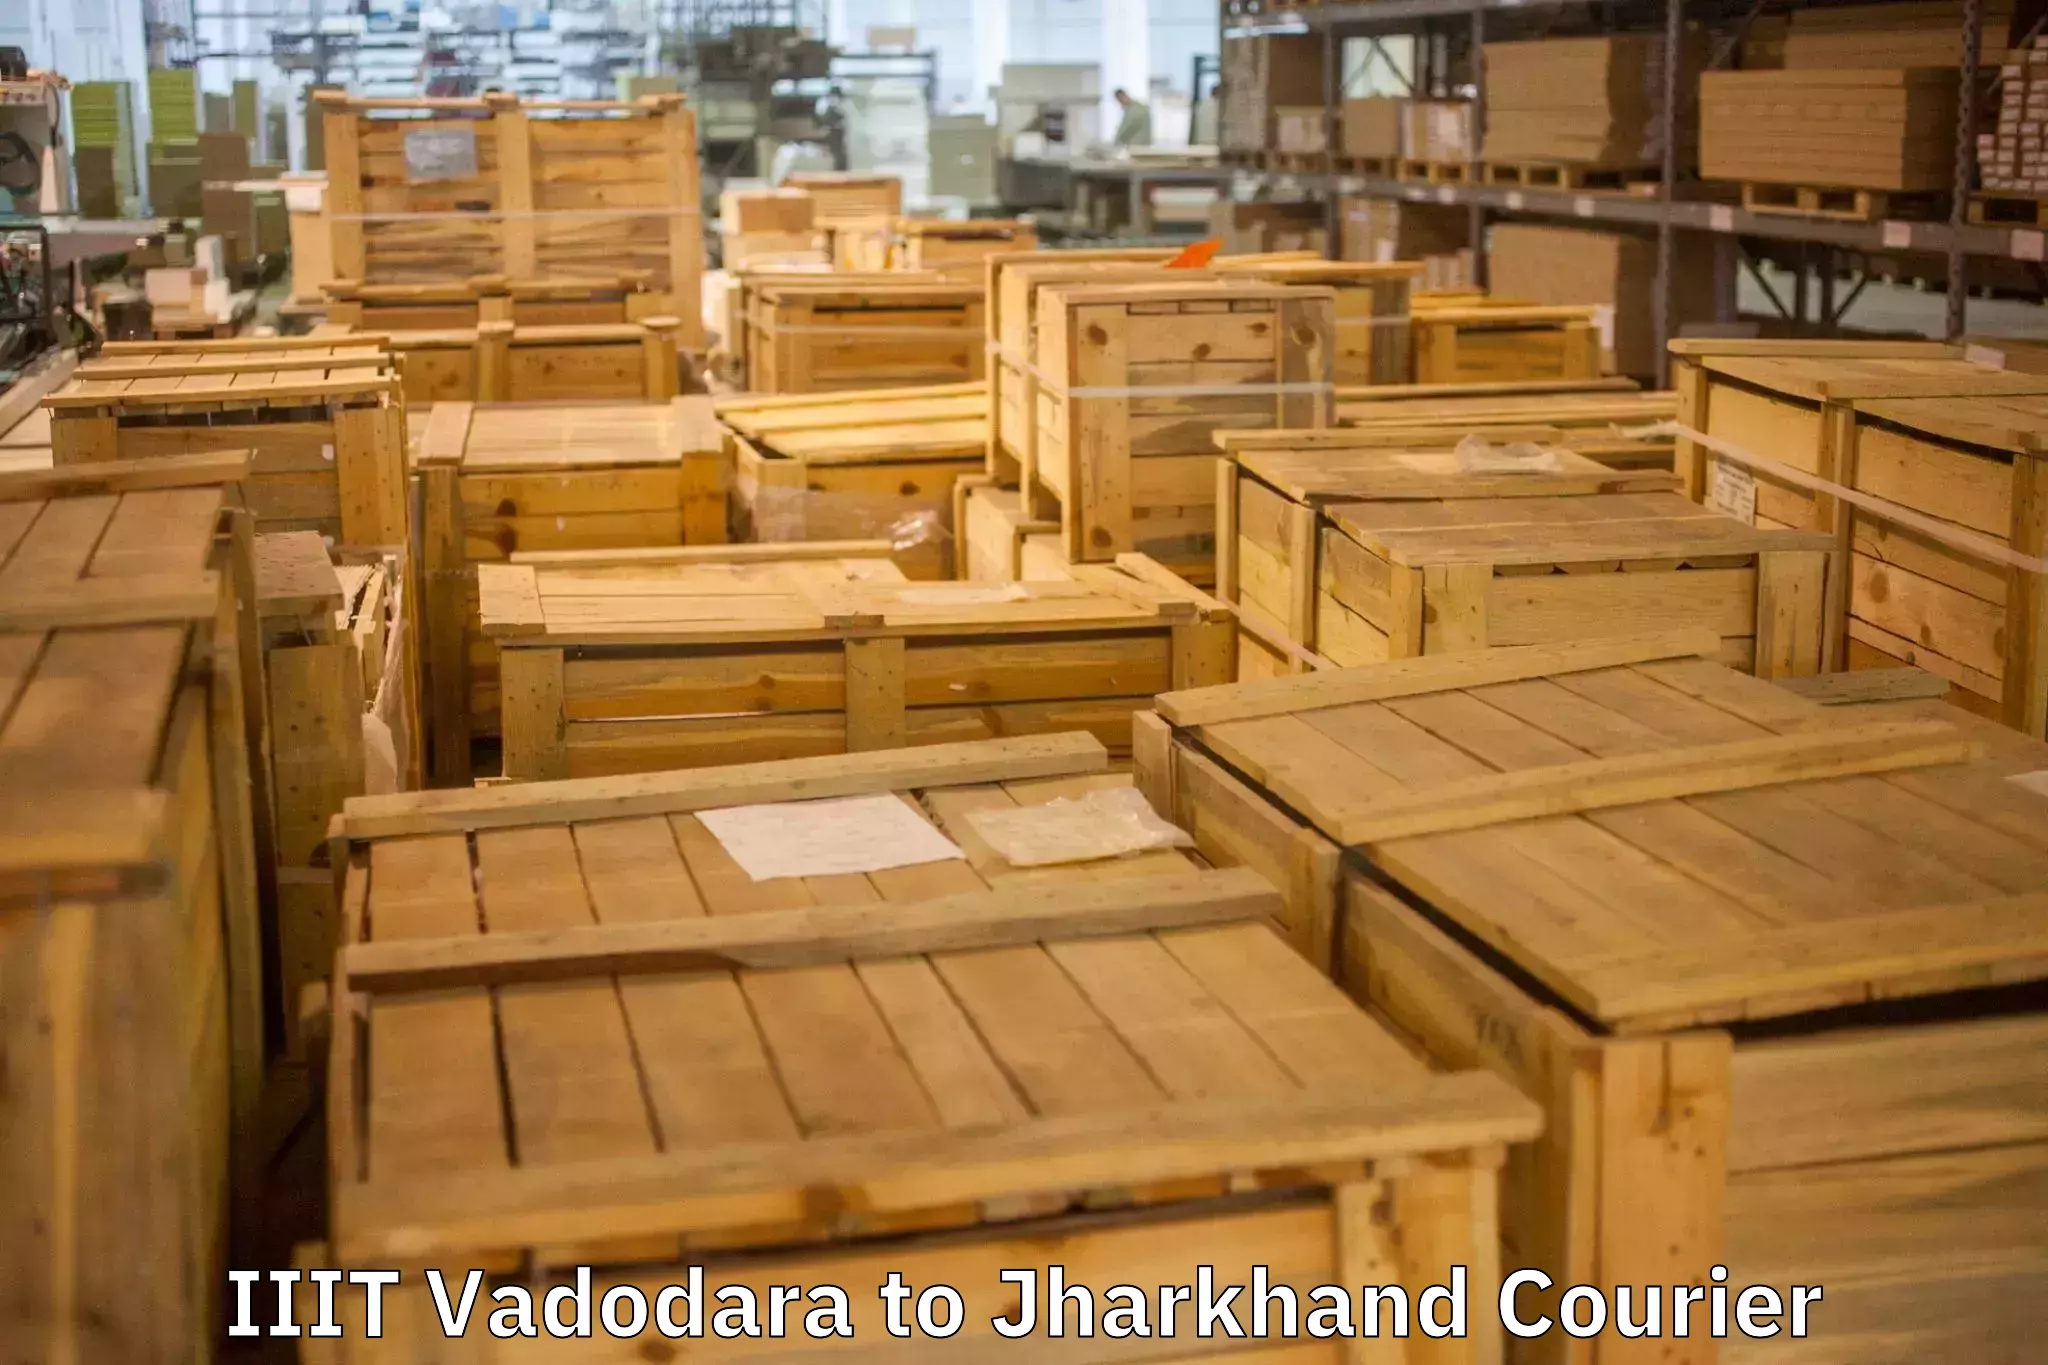 Seamless moving process IIIT Vadodara to IIT Dhanbad